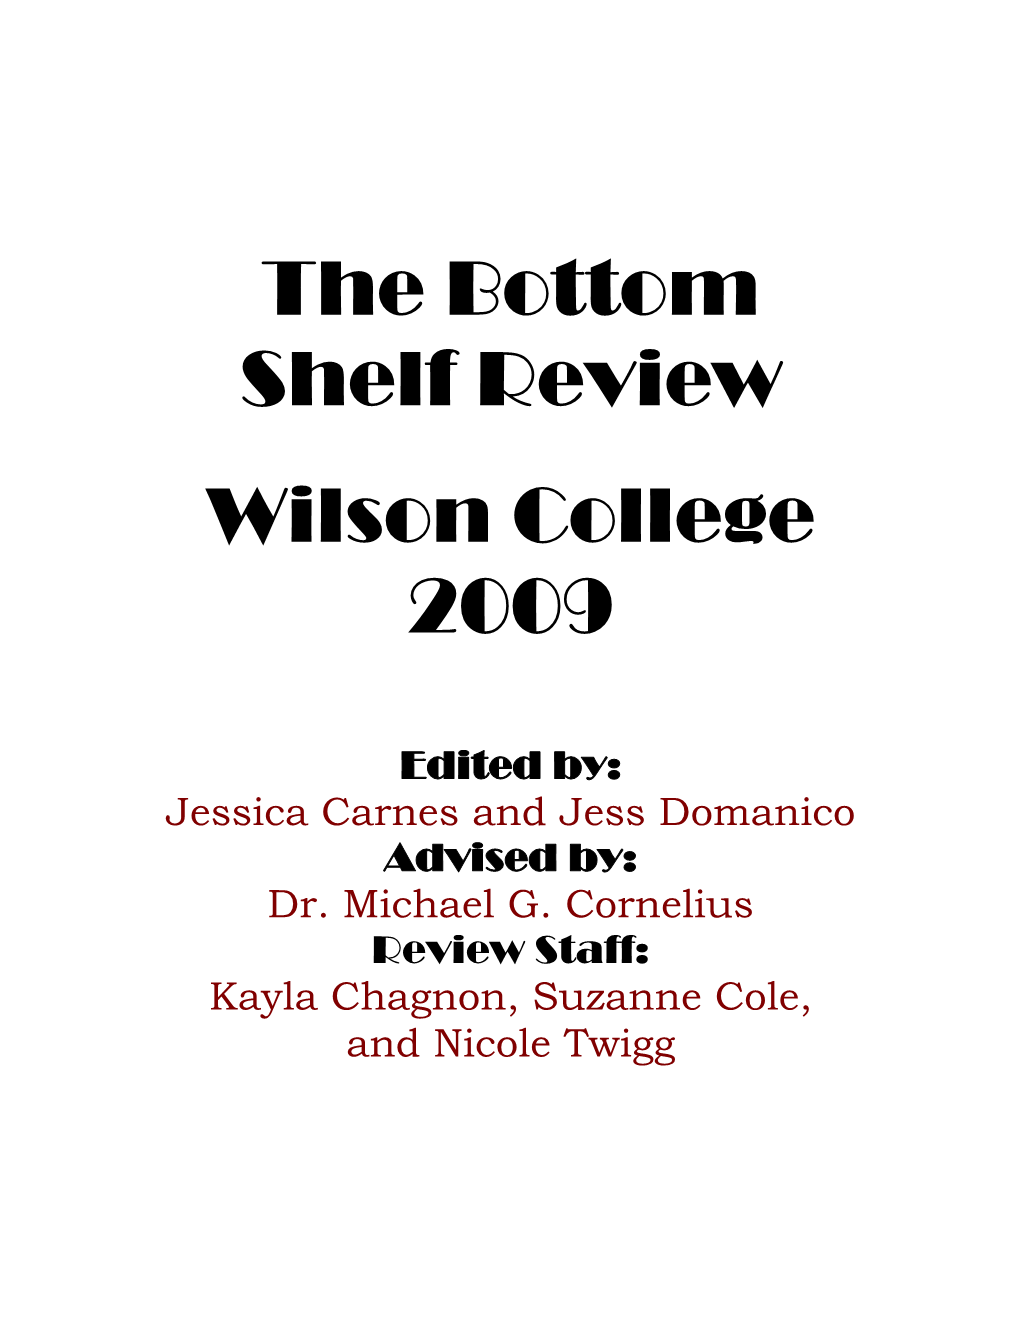 The Bottom Shelf Review Wilson College 2009